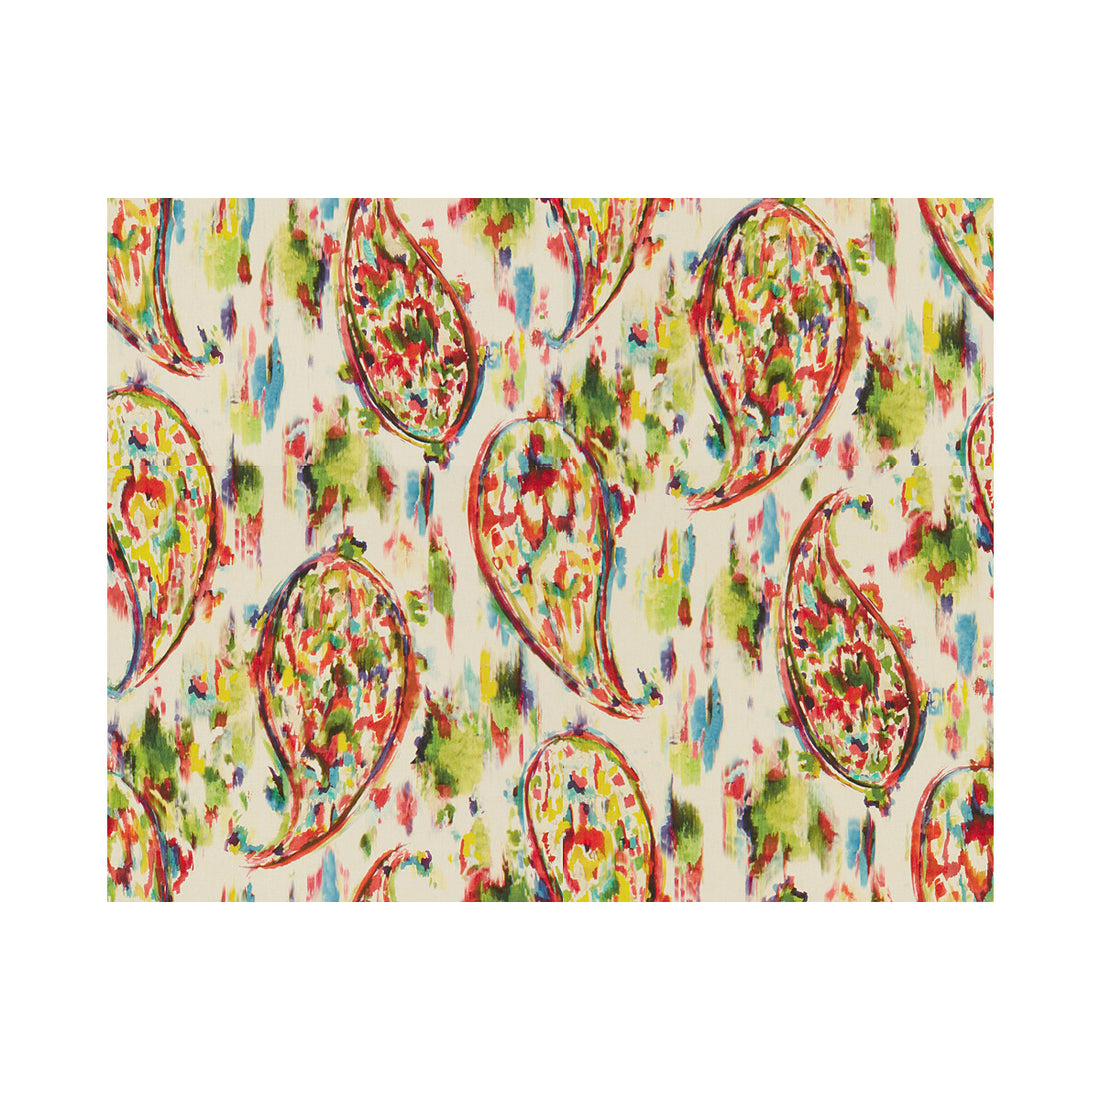 Kravet Design fabric in paisleymon-317 color - pattern PAISLEYMON.317.0 - by Kravet Design